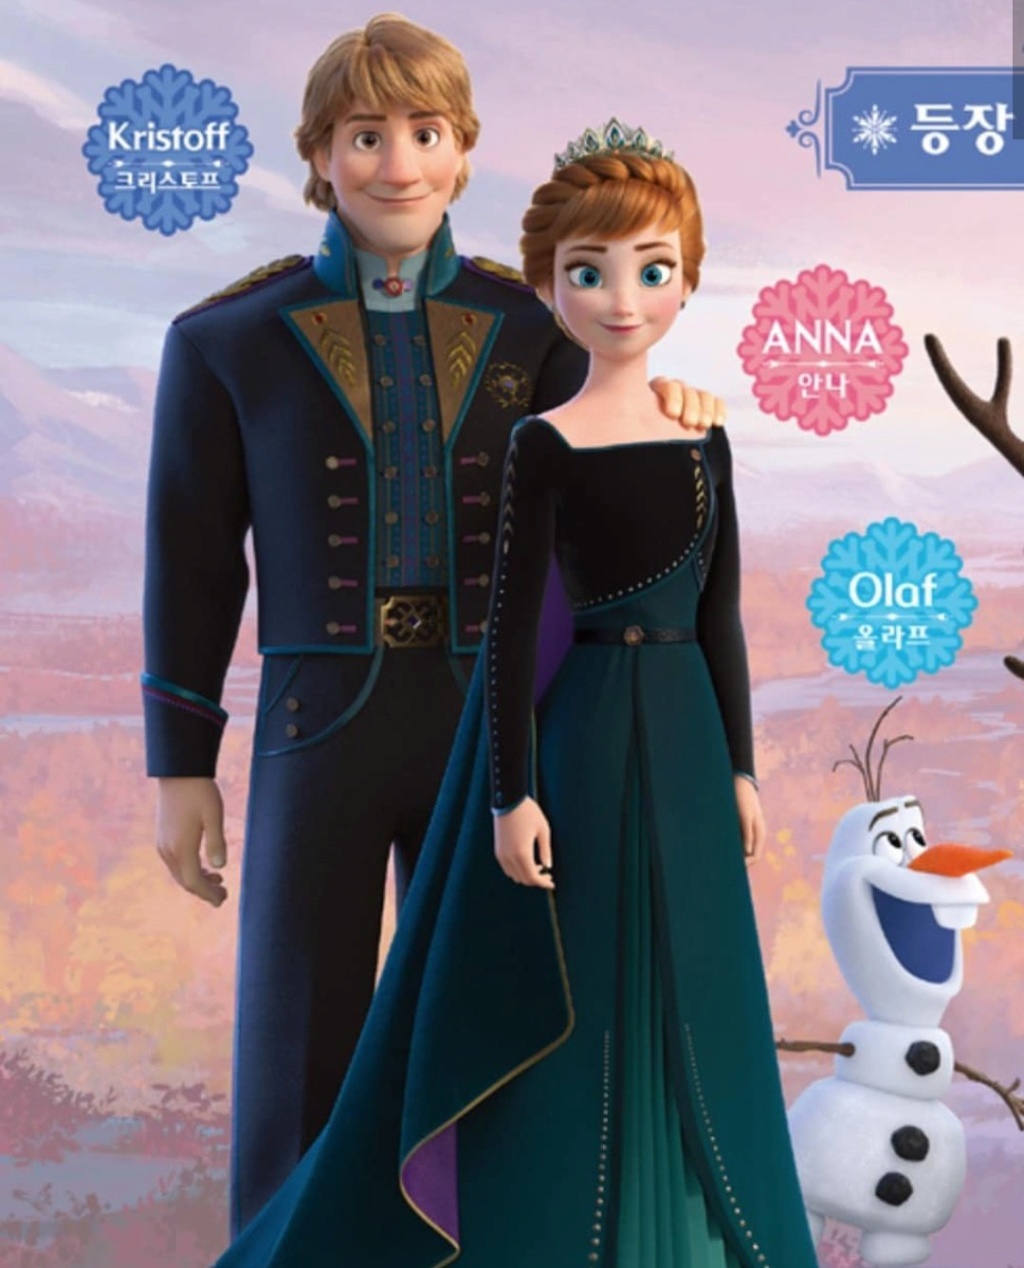 disneyfrozen - La Reine des Neiges II [Walt Disney - 2019] - Page 13 Elf4nj10